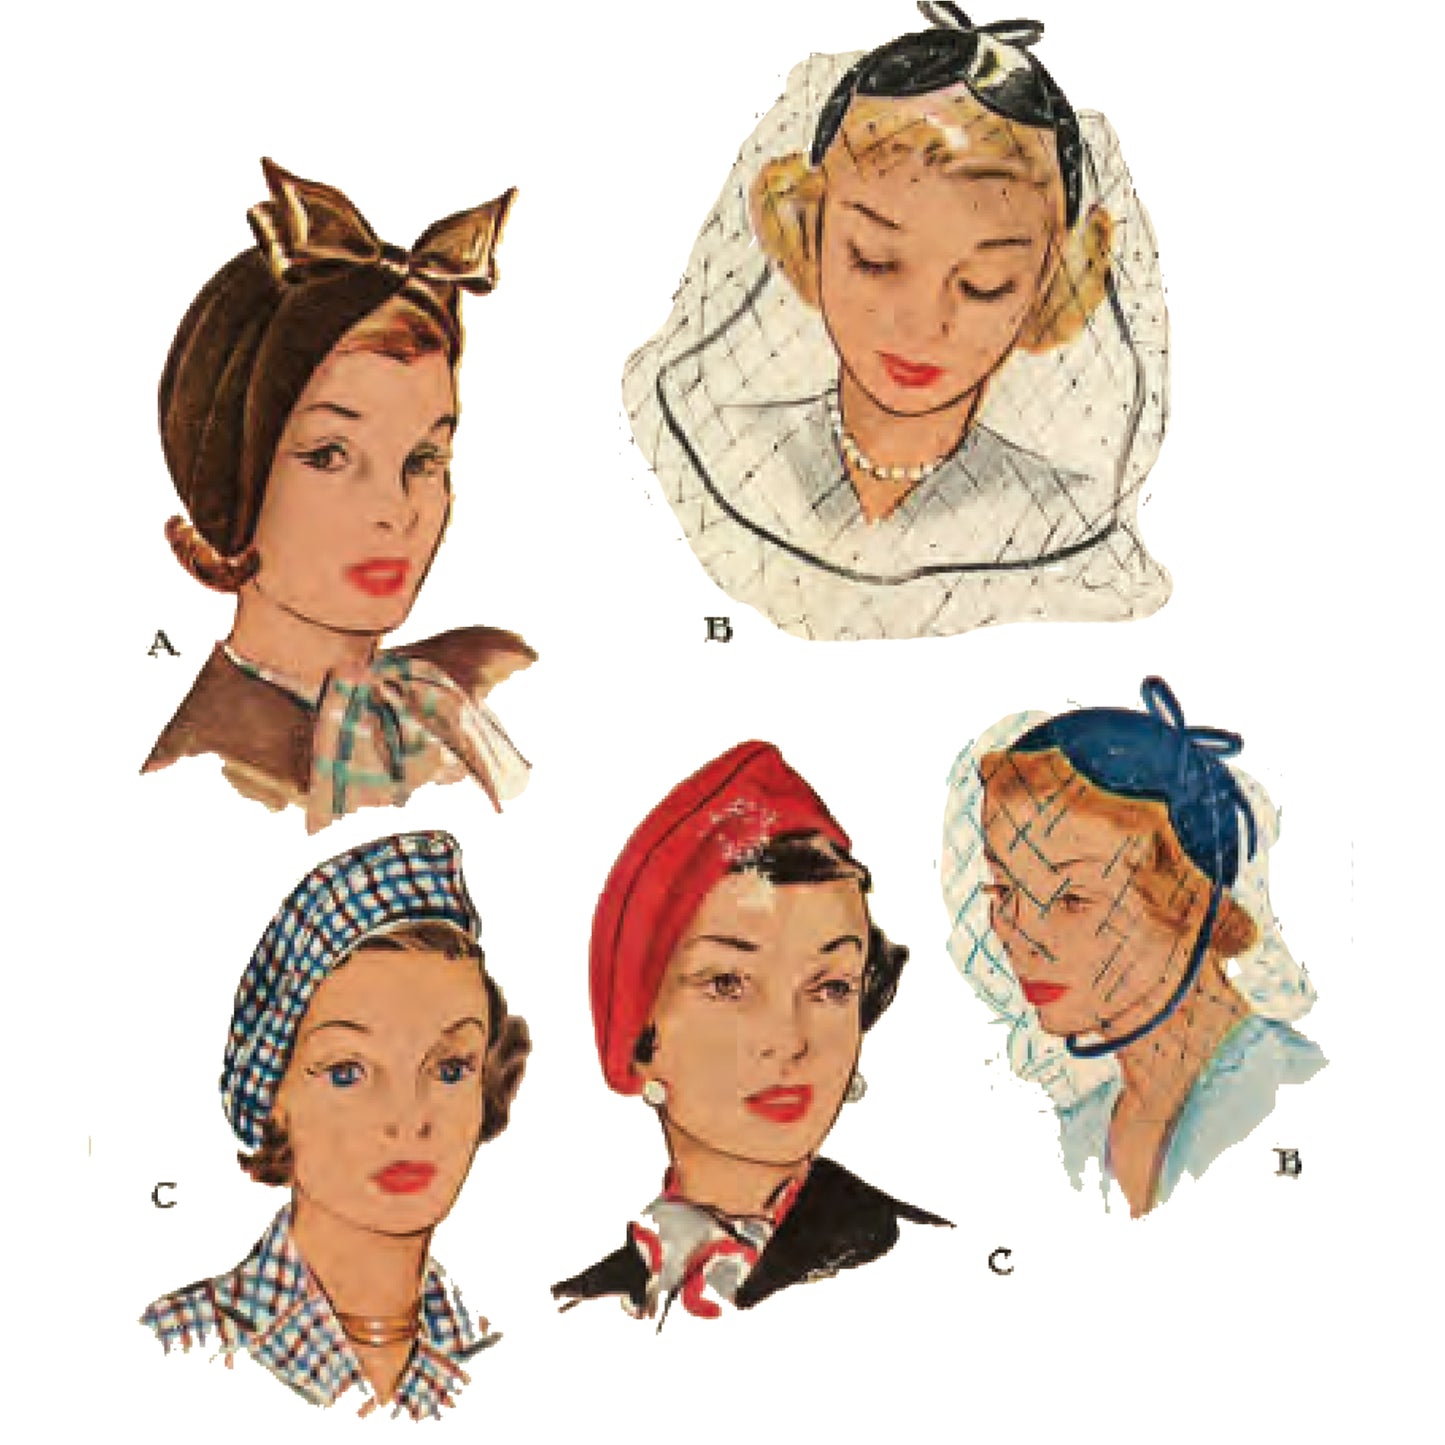 Women wearing hats in different styles.